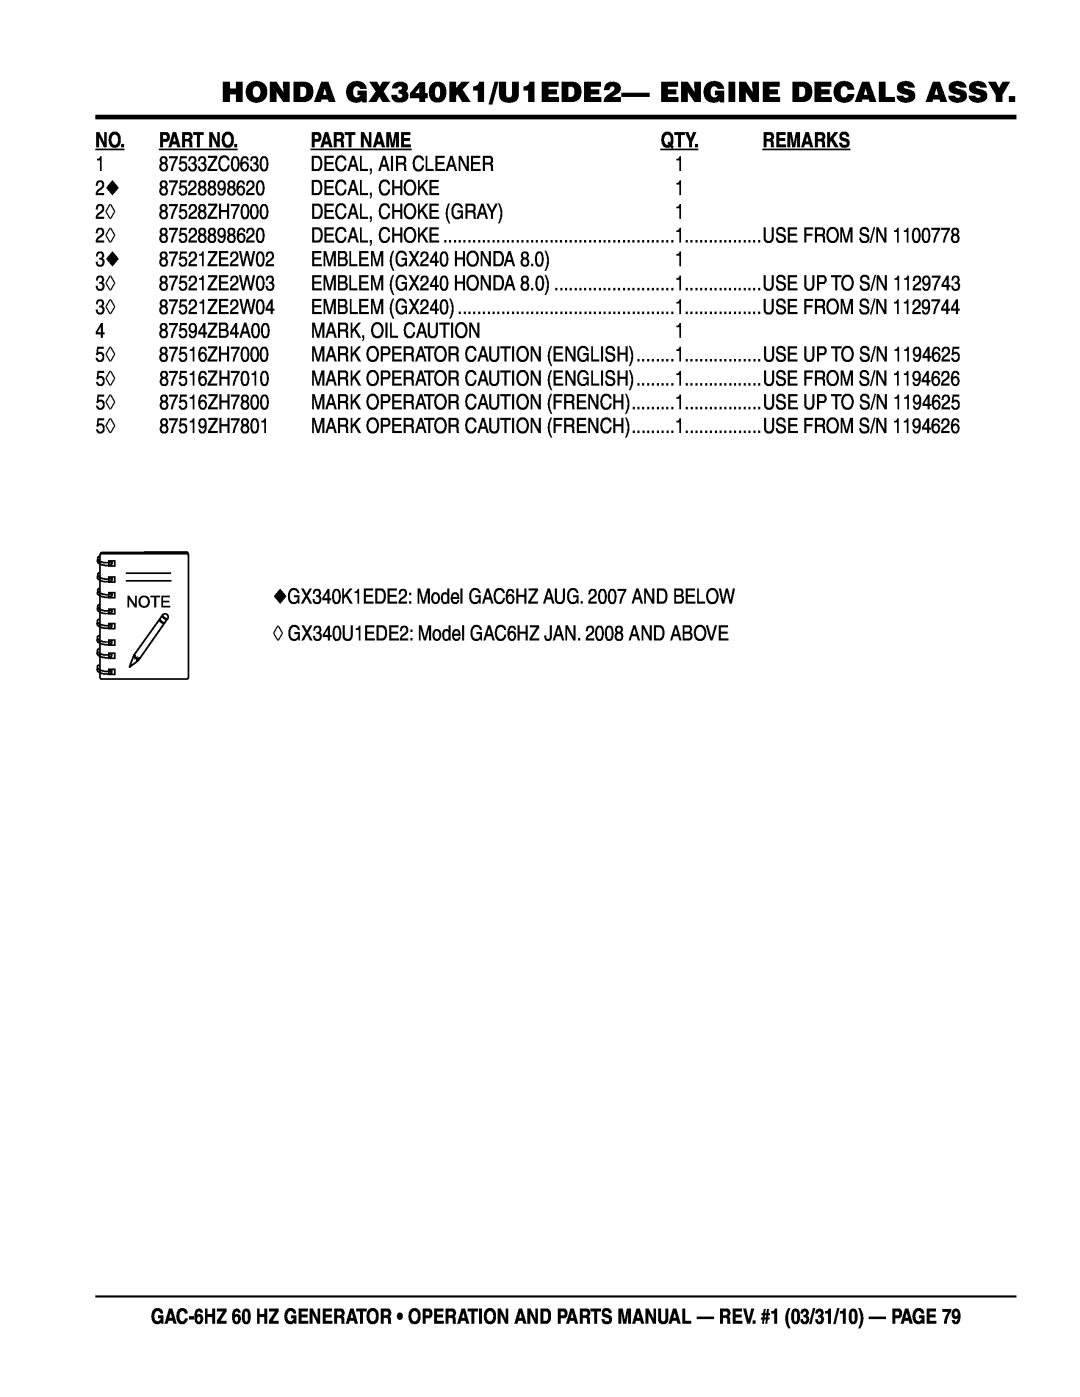 Multiquip GAC6HZ manual HONDA GX340K1/U1EDE2- ENGINE DECALS ASSY, Part Name, Remarks 